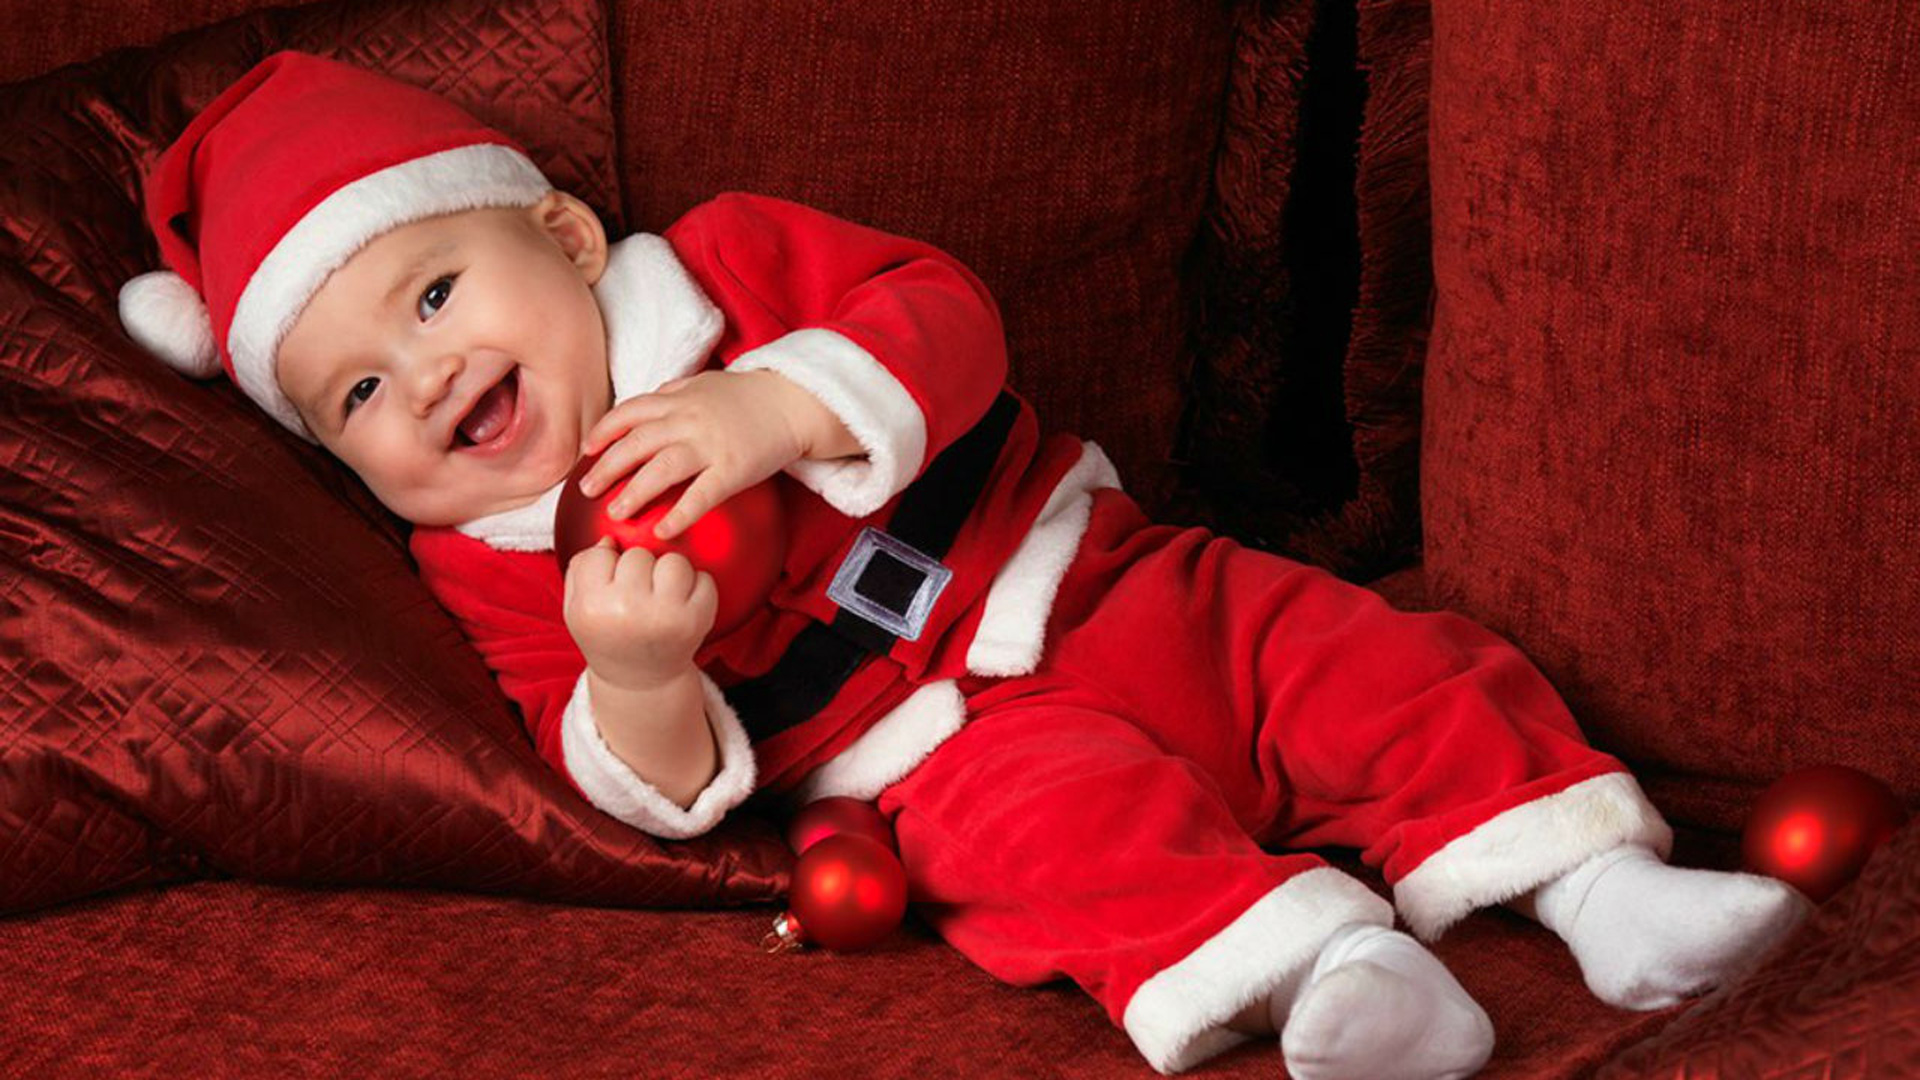 Beautiful Cute Smiling Baby Is Wearing Santa Claus Red Dress Cap Lying Down On Dark Maroon Cloth 2K Cute